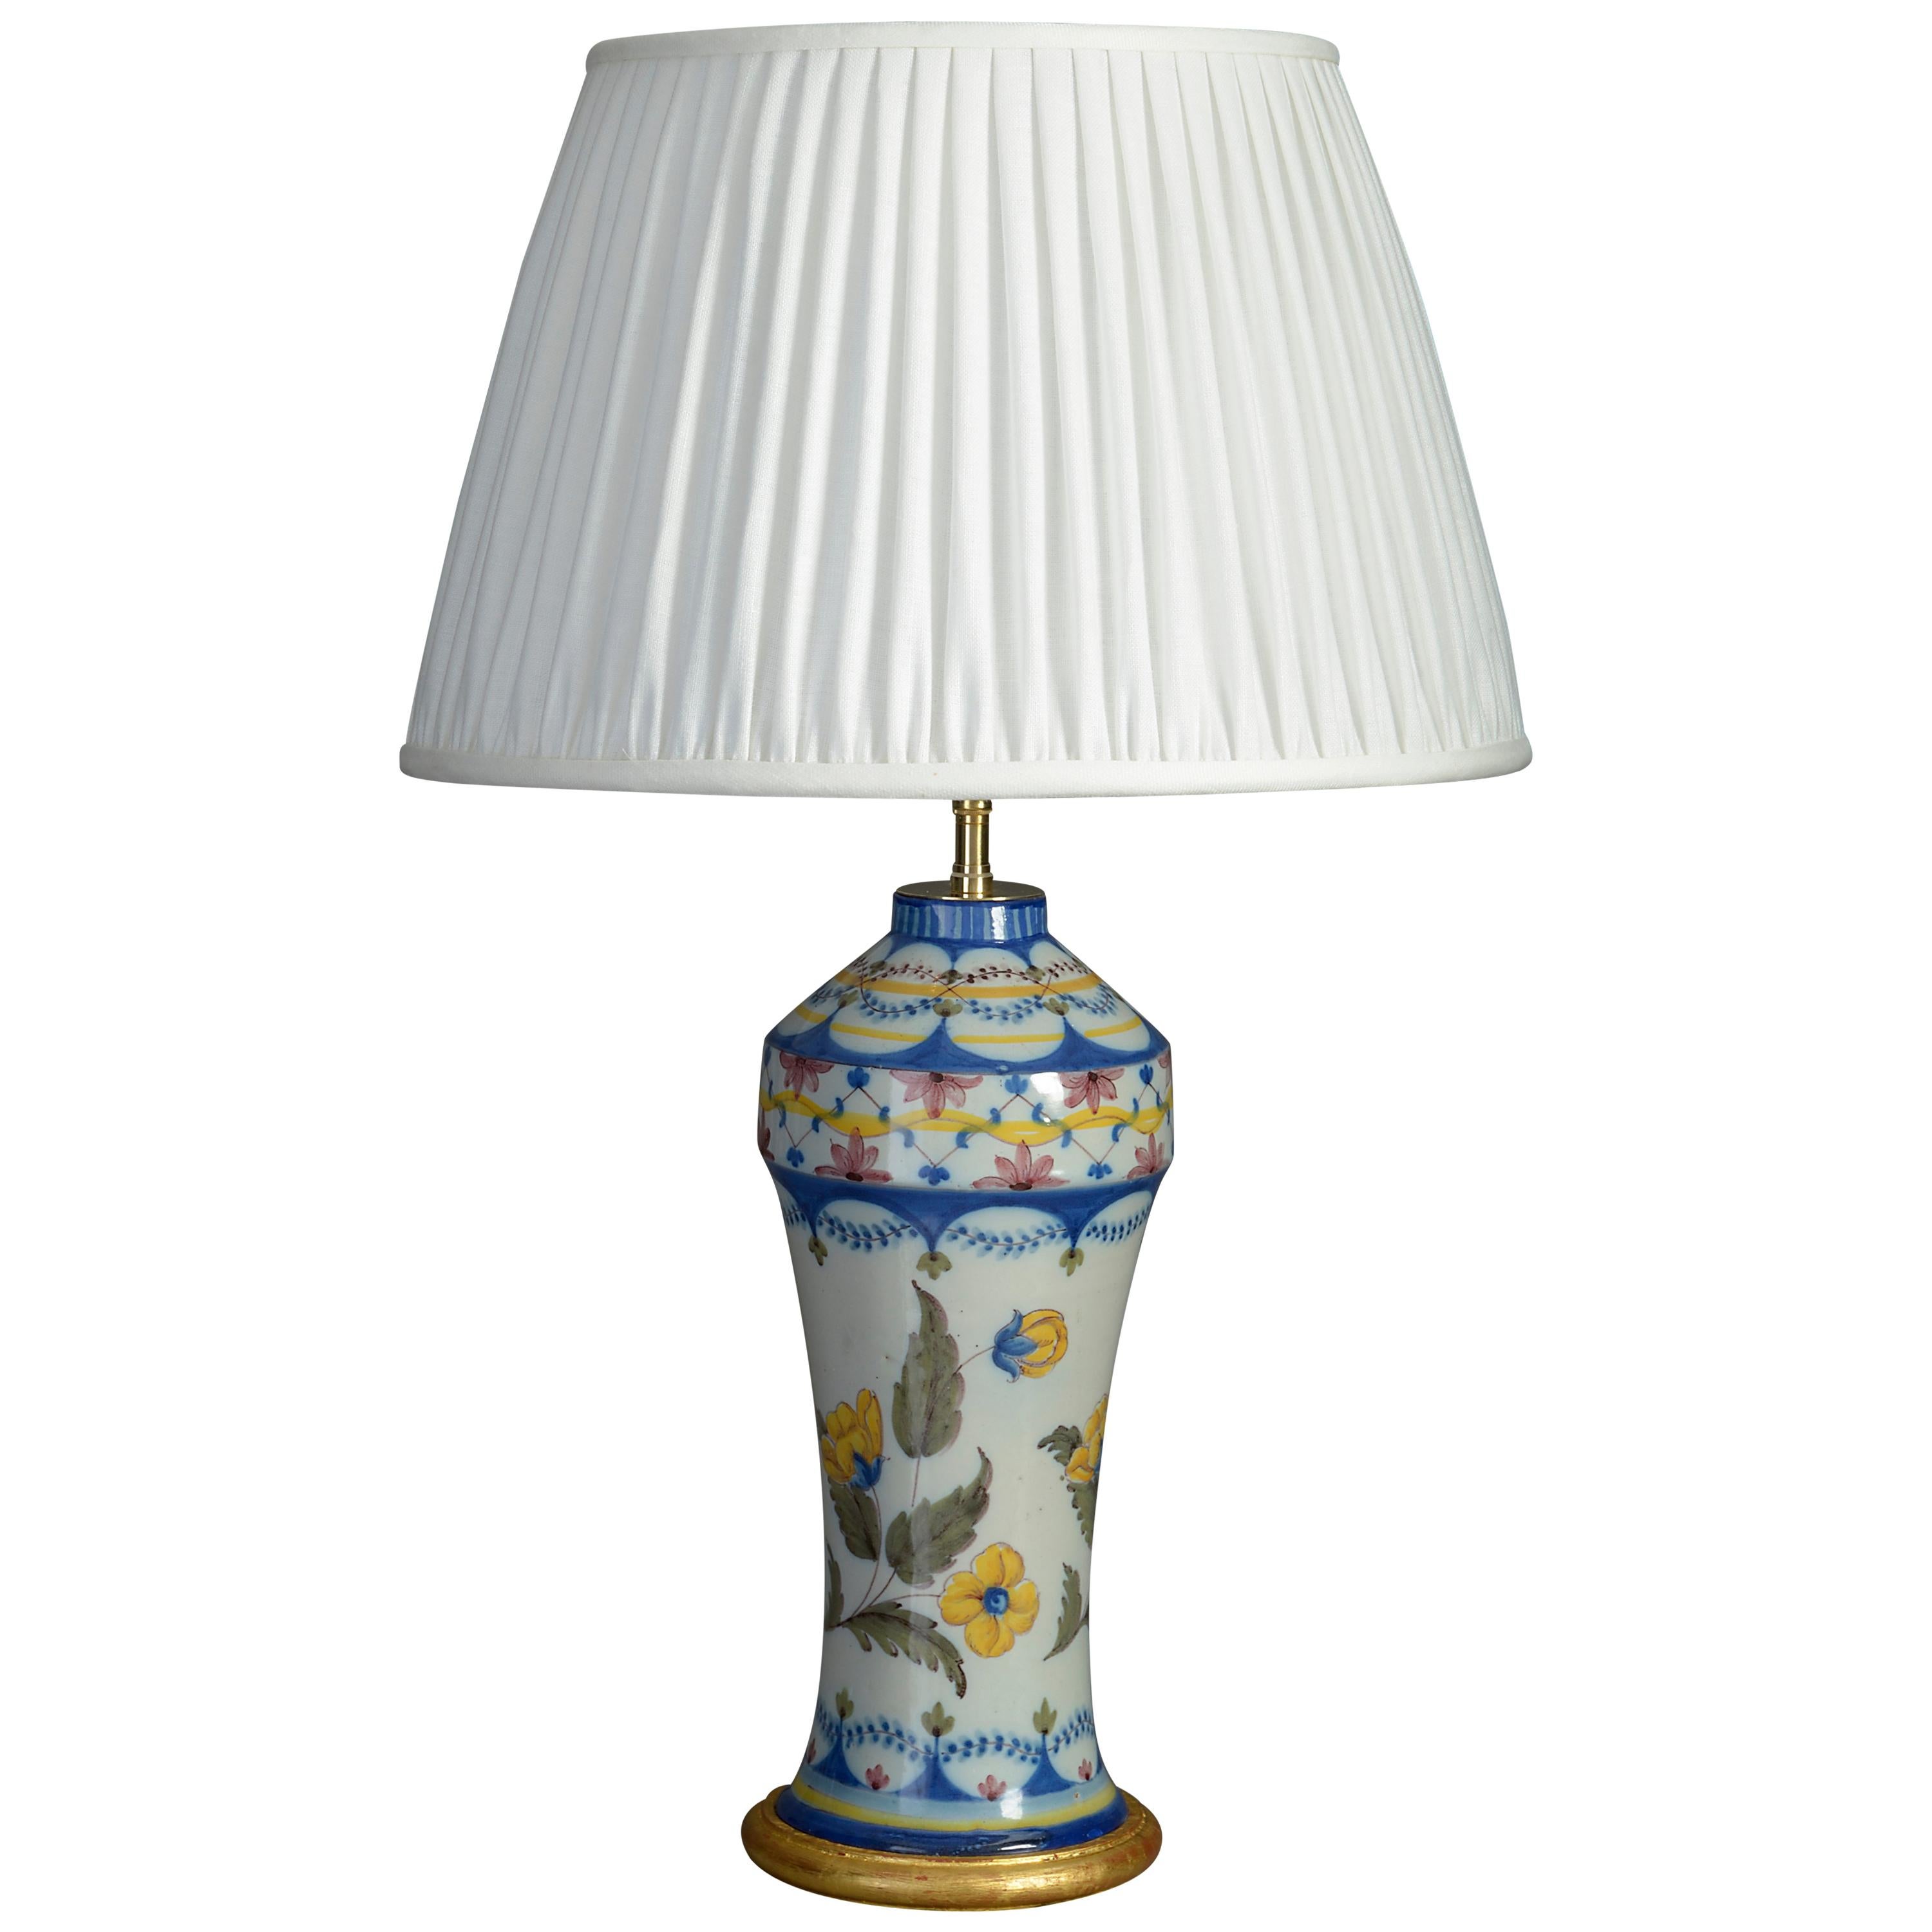 19th Century Polychrome Glazed Faience Vase Lamp